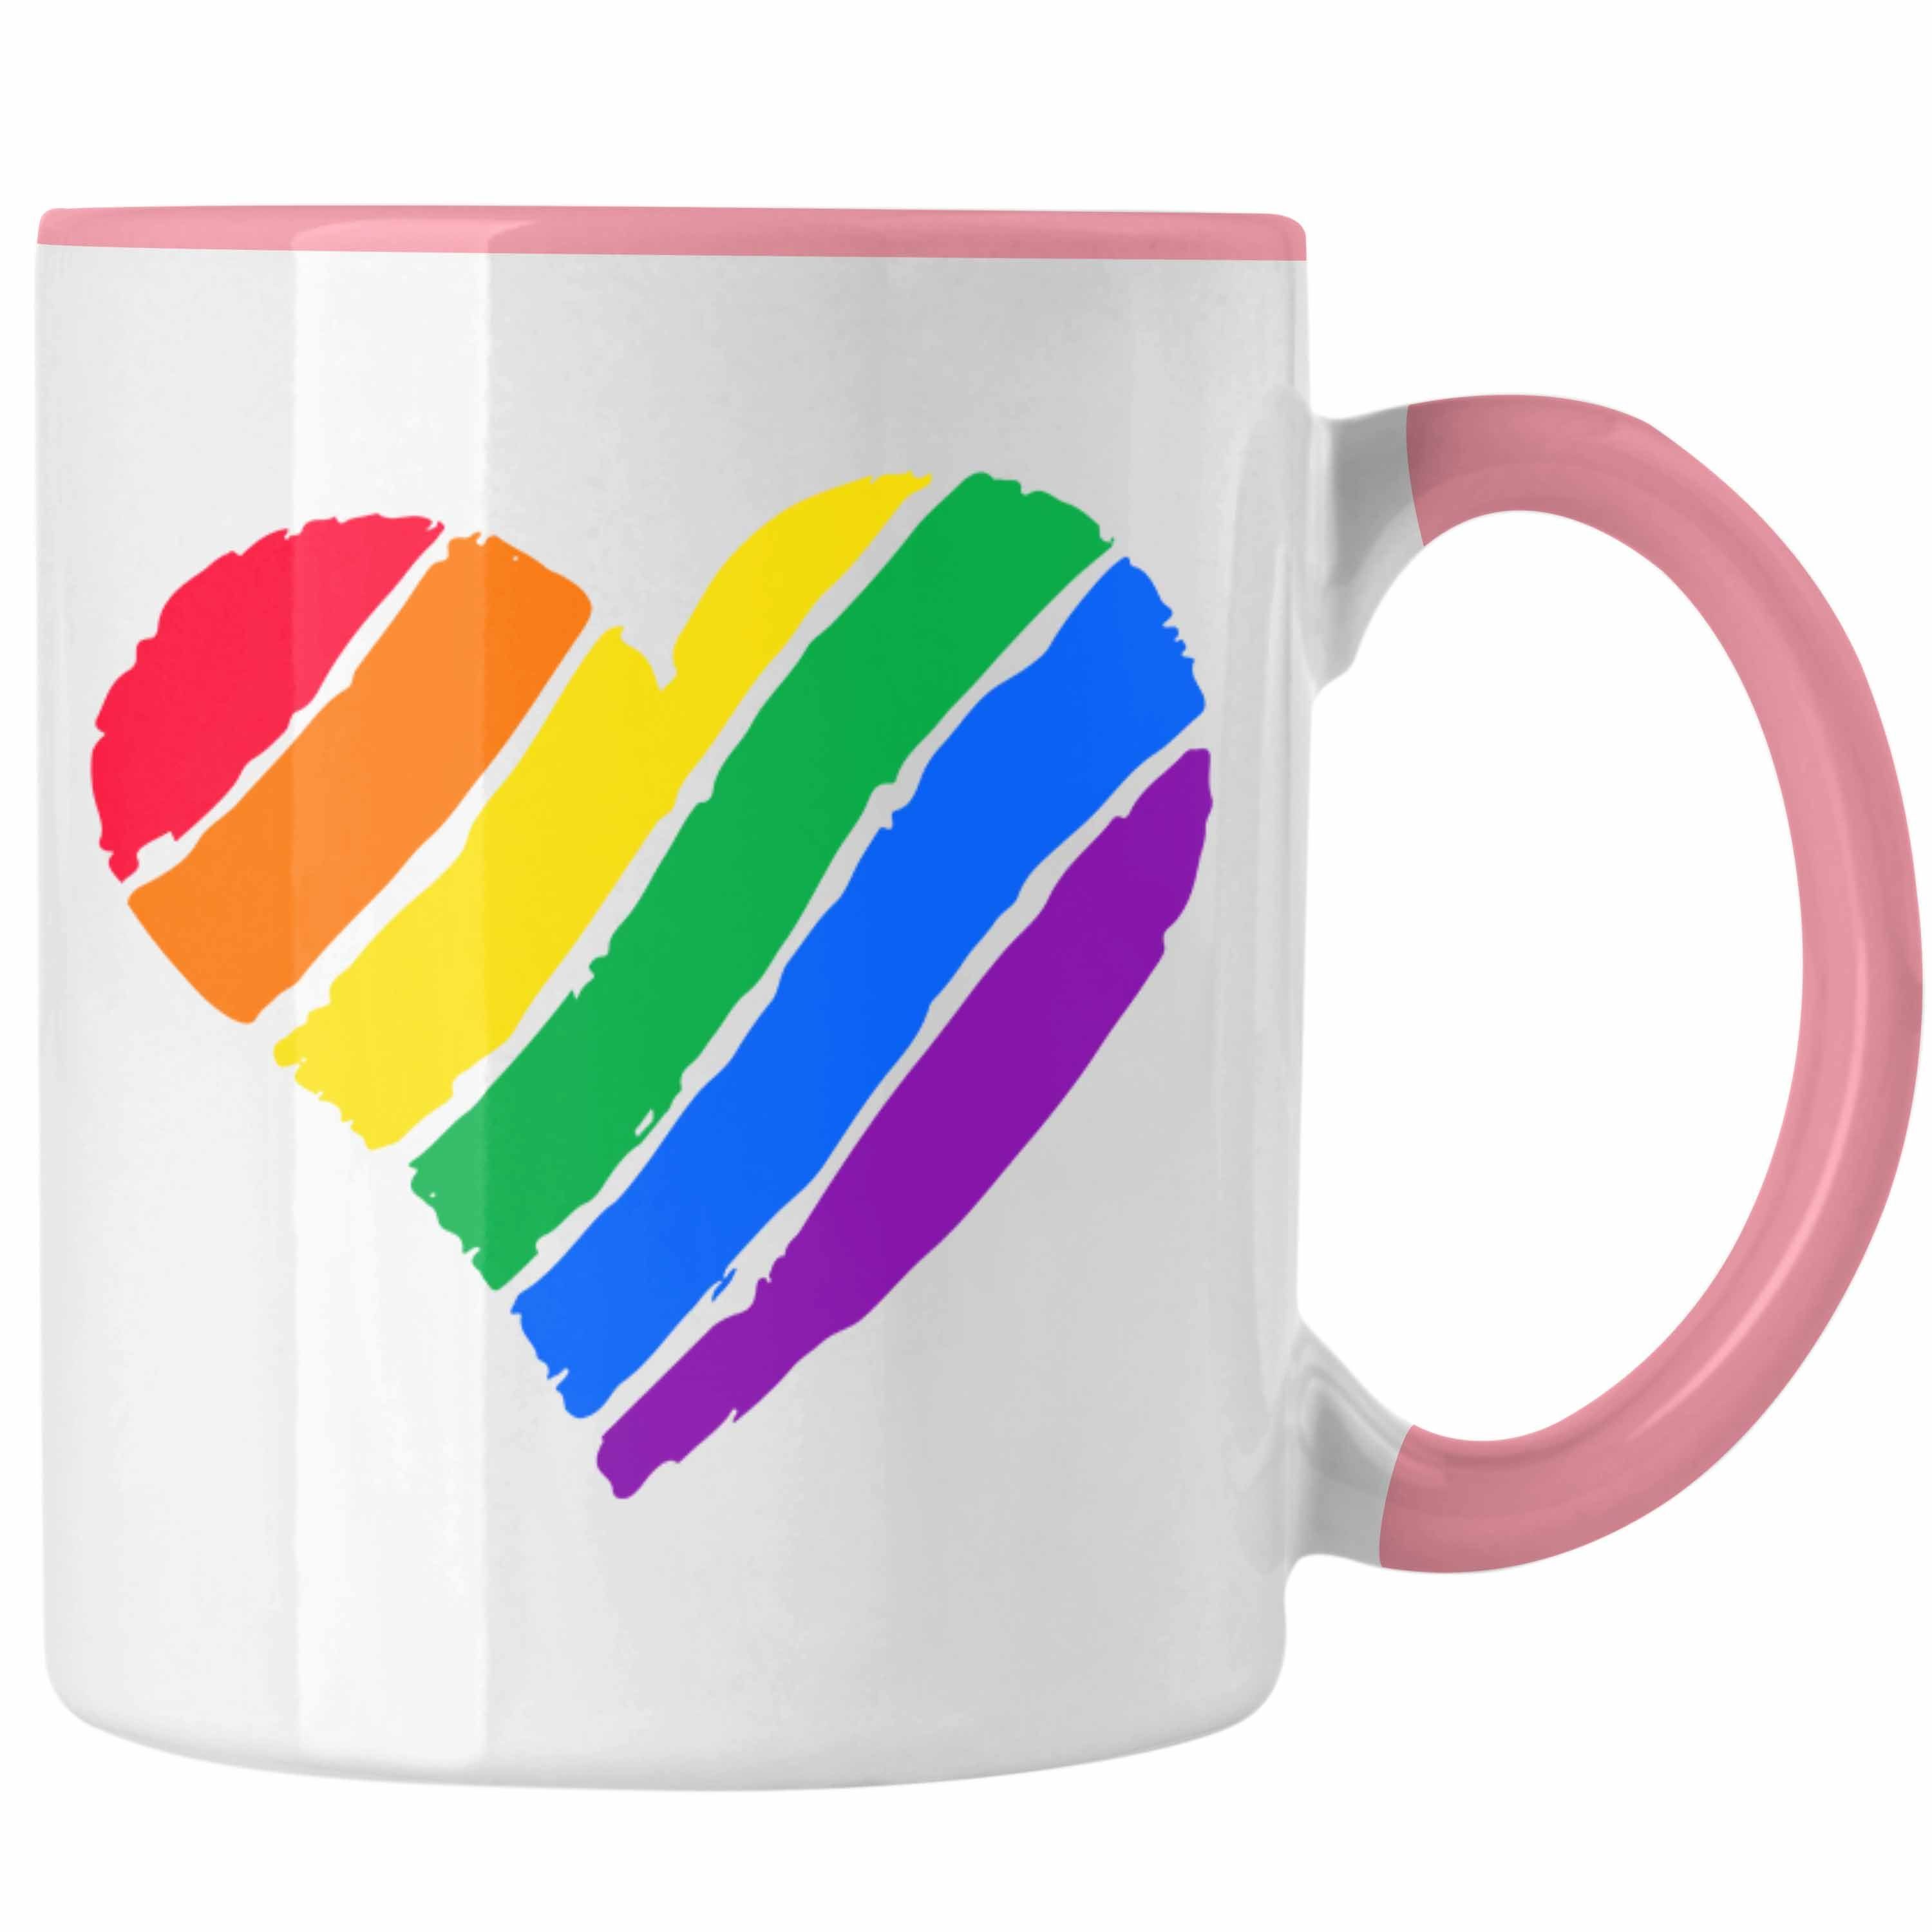 Trendation Tasse Trendation - Regenbogen Tasse Geschenk LGBT Schwule Lesben Transgender Grafik Pride Herz Rosa | Teetassen